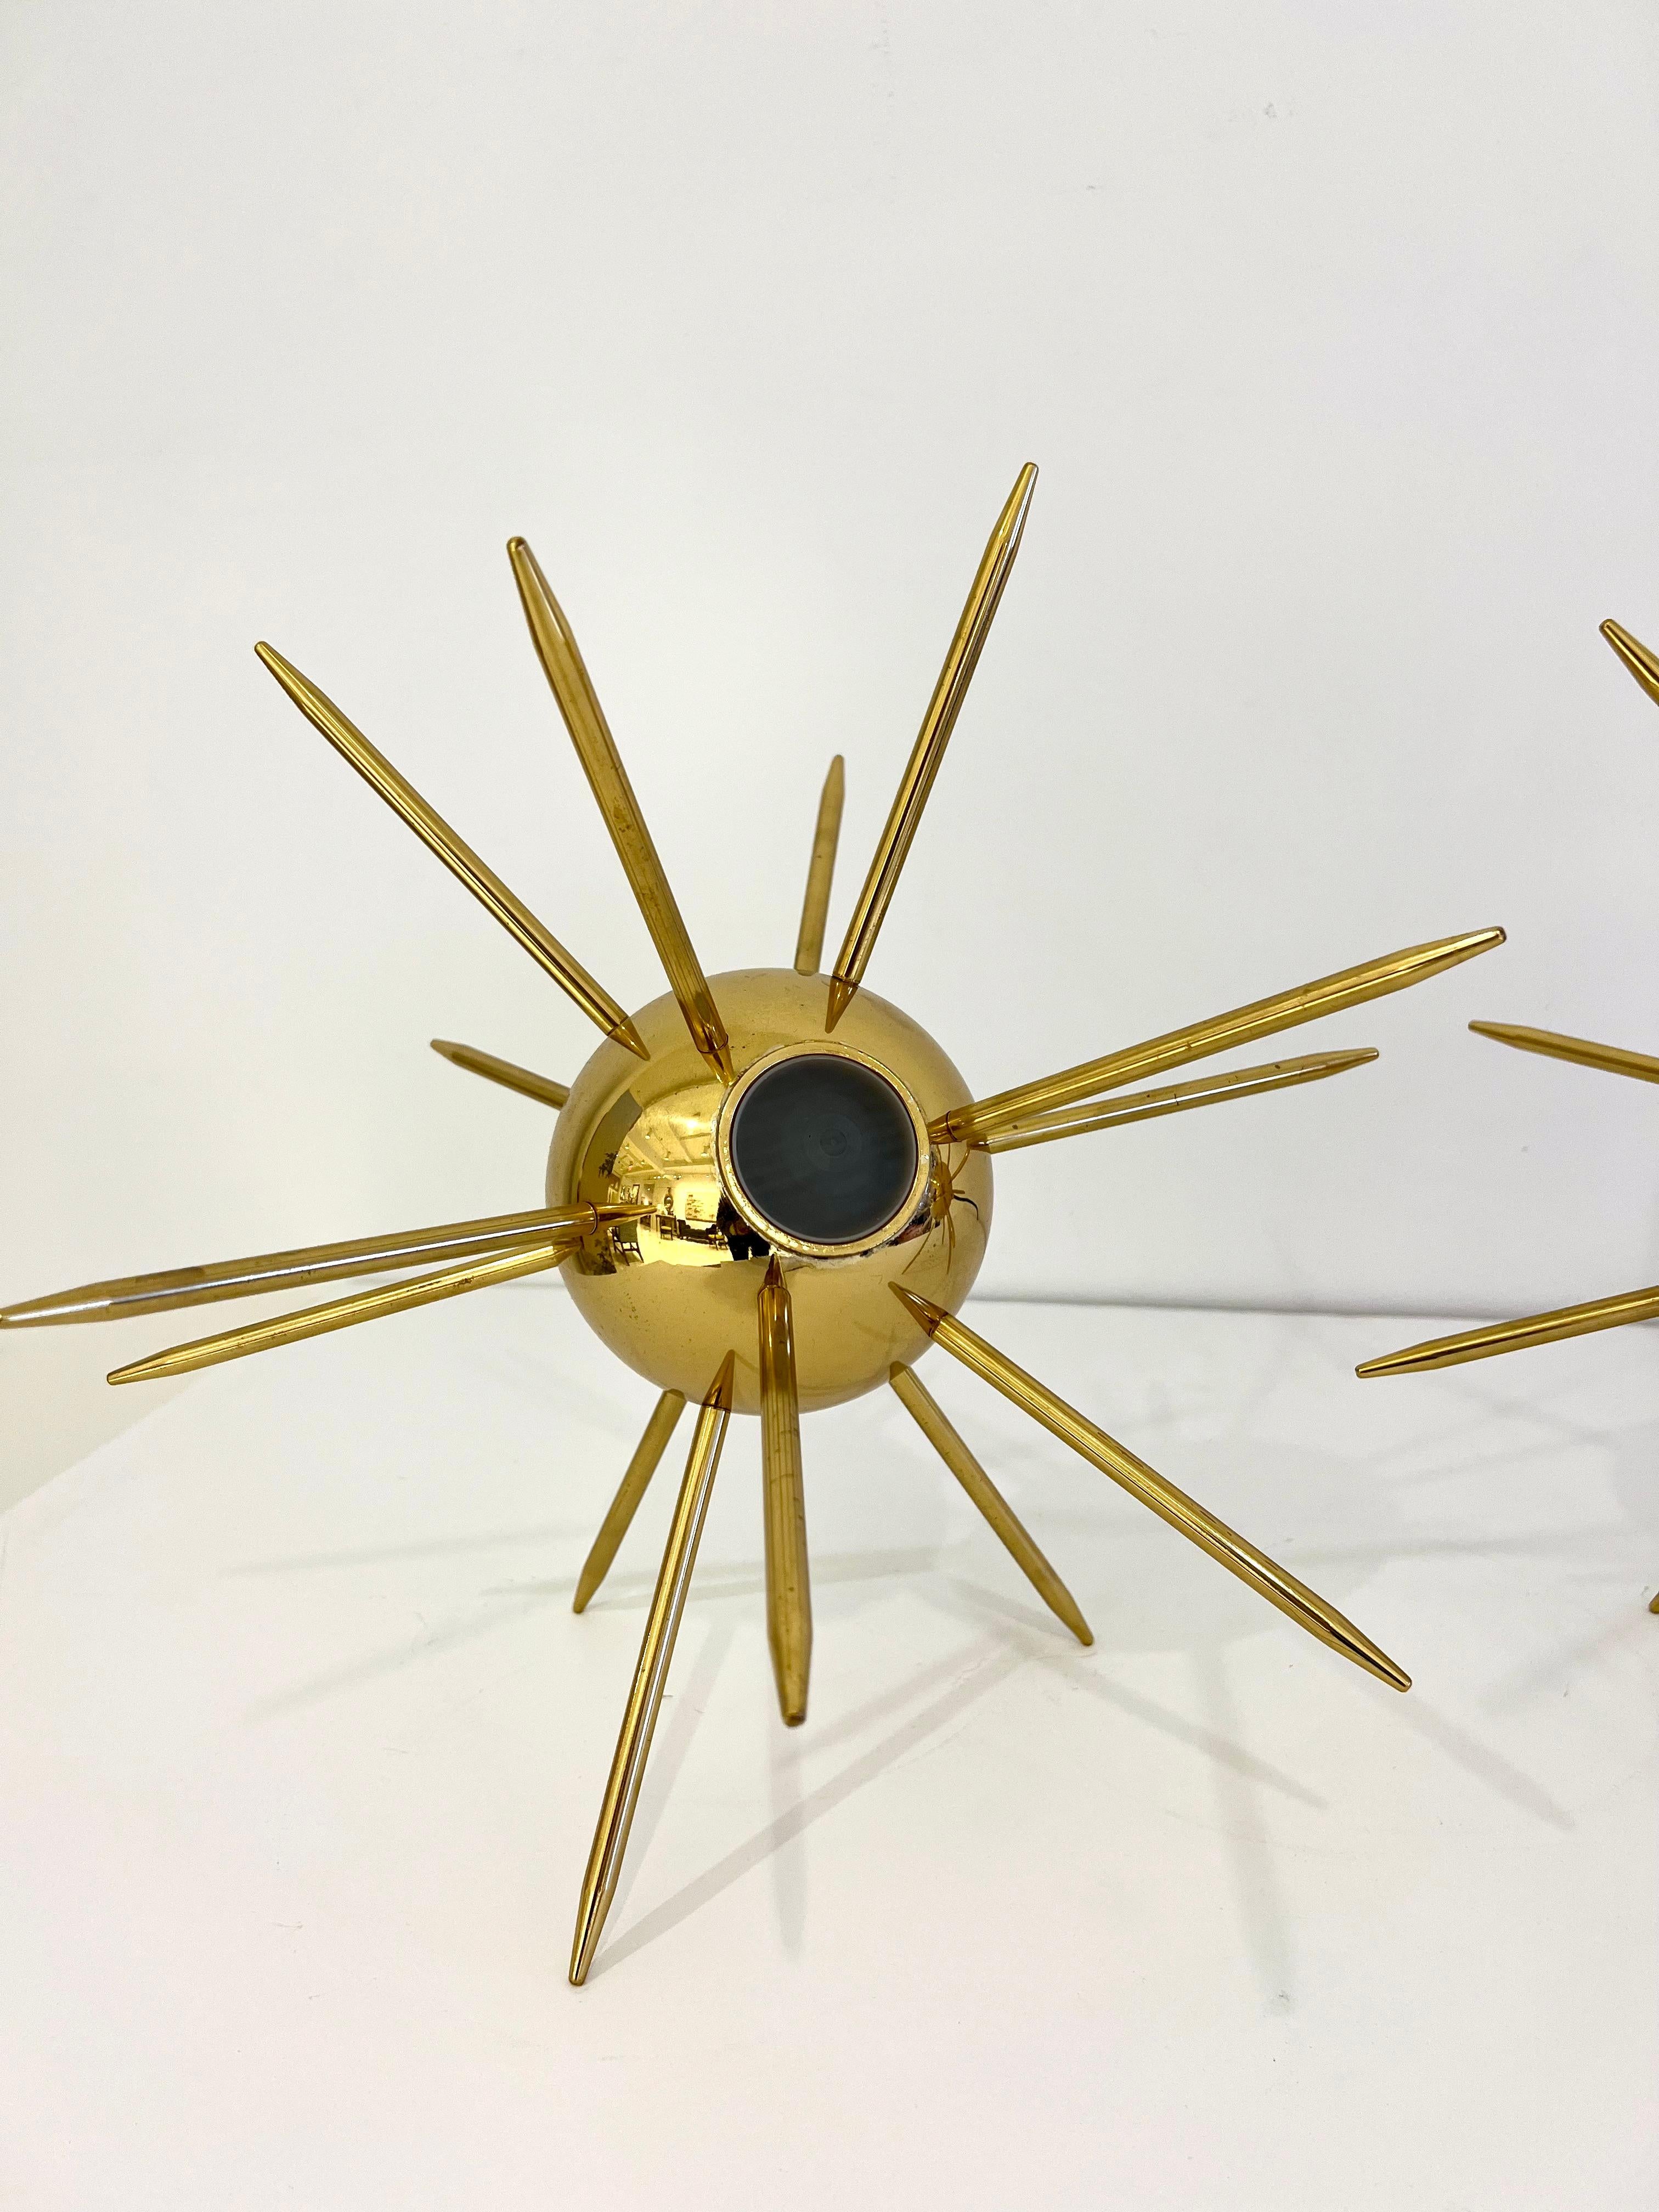 Pair of contemporary Brass Sputnik Lights. Italy, contemporary.
Overall diameter: 16